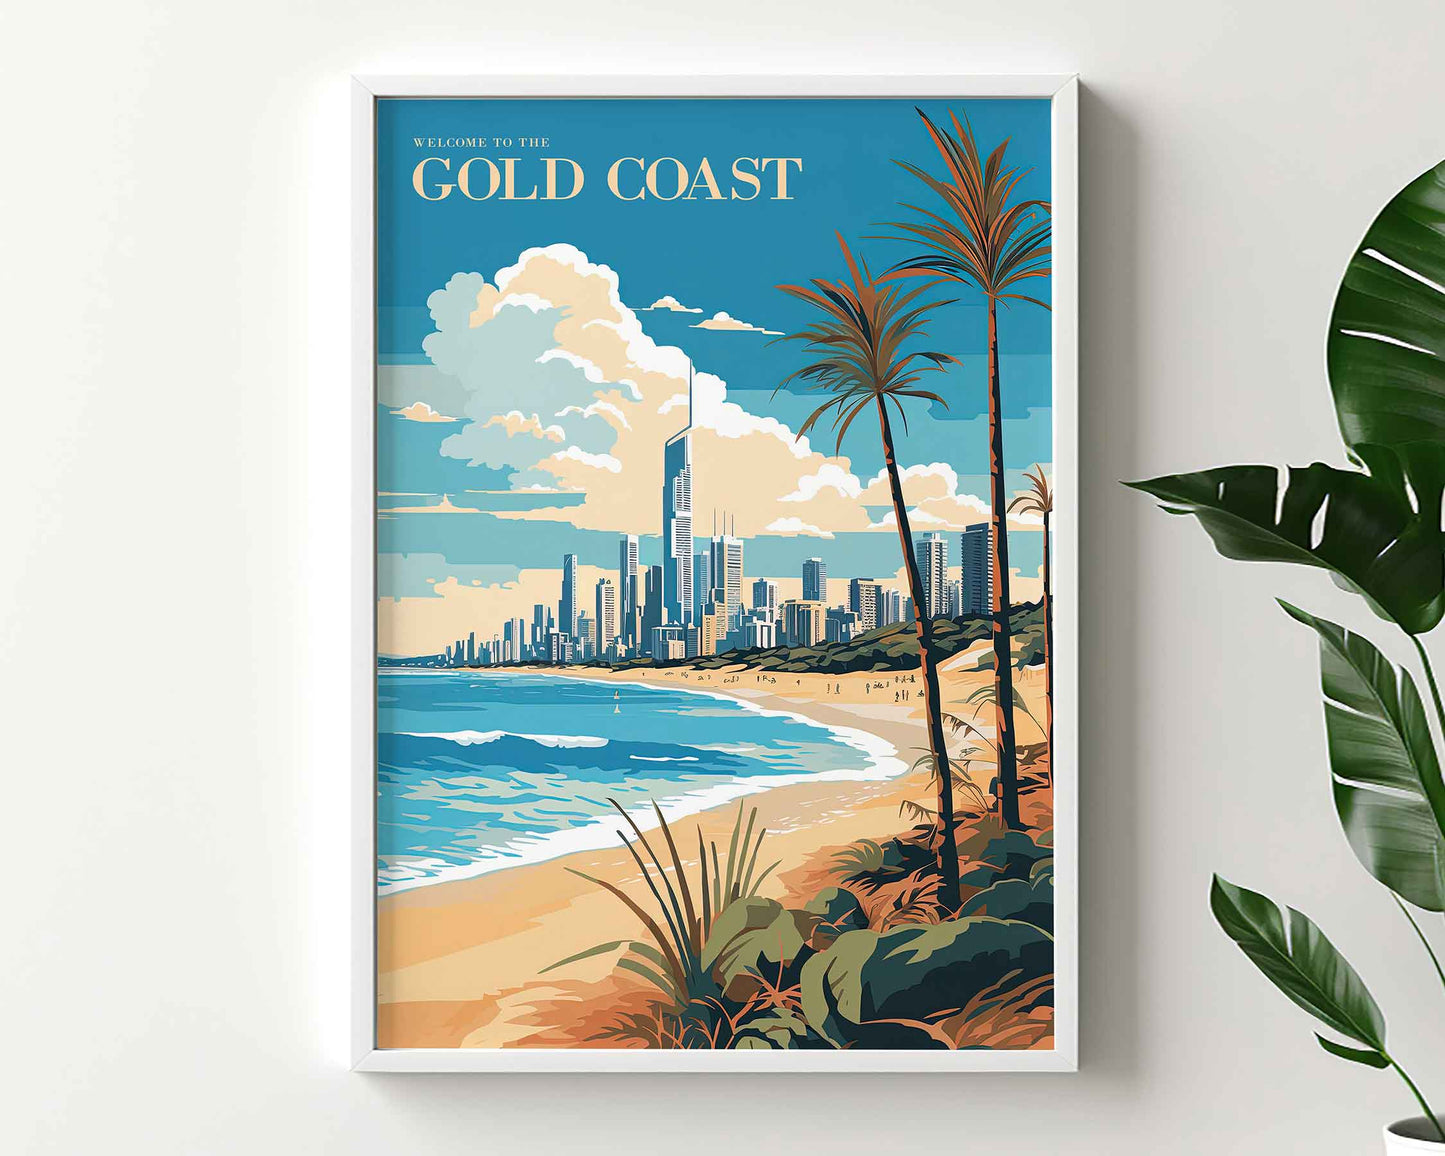 Framed Image of Gold Coast Australia Travel Illustration Poster Prints Wall Art